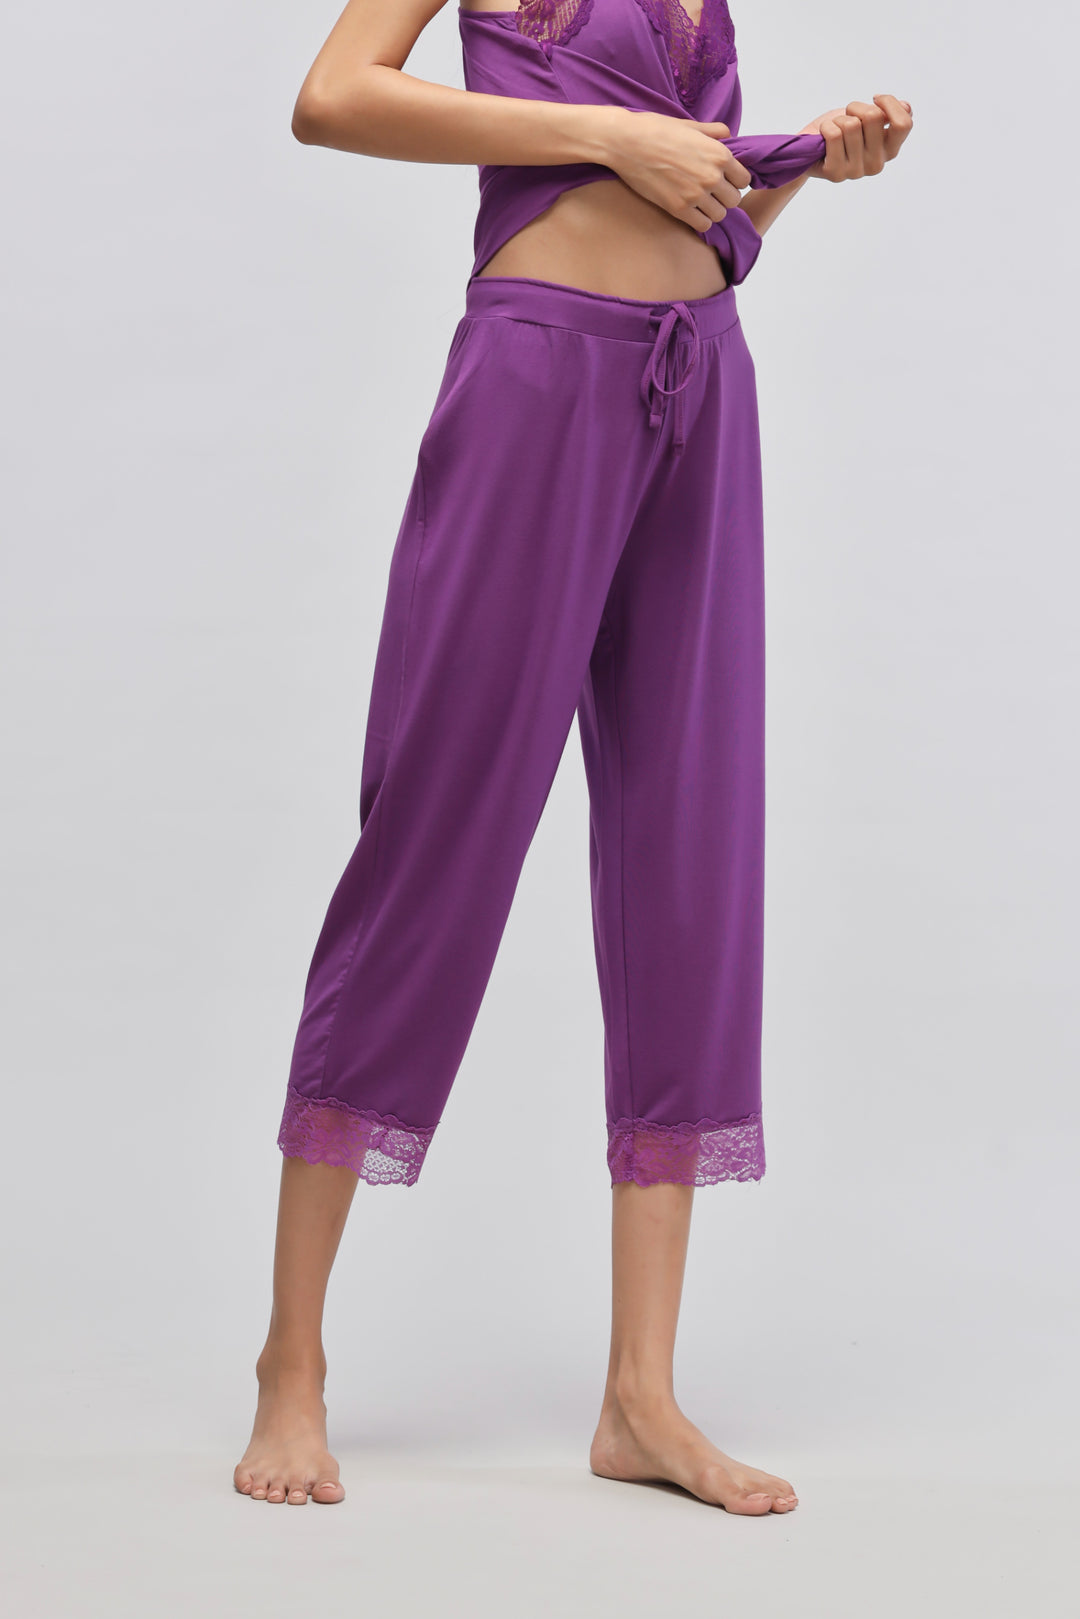 Dreamy Purple Lace Capri Set